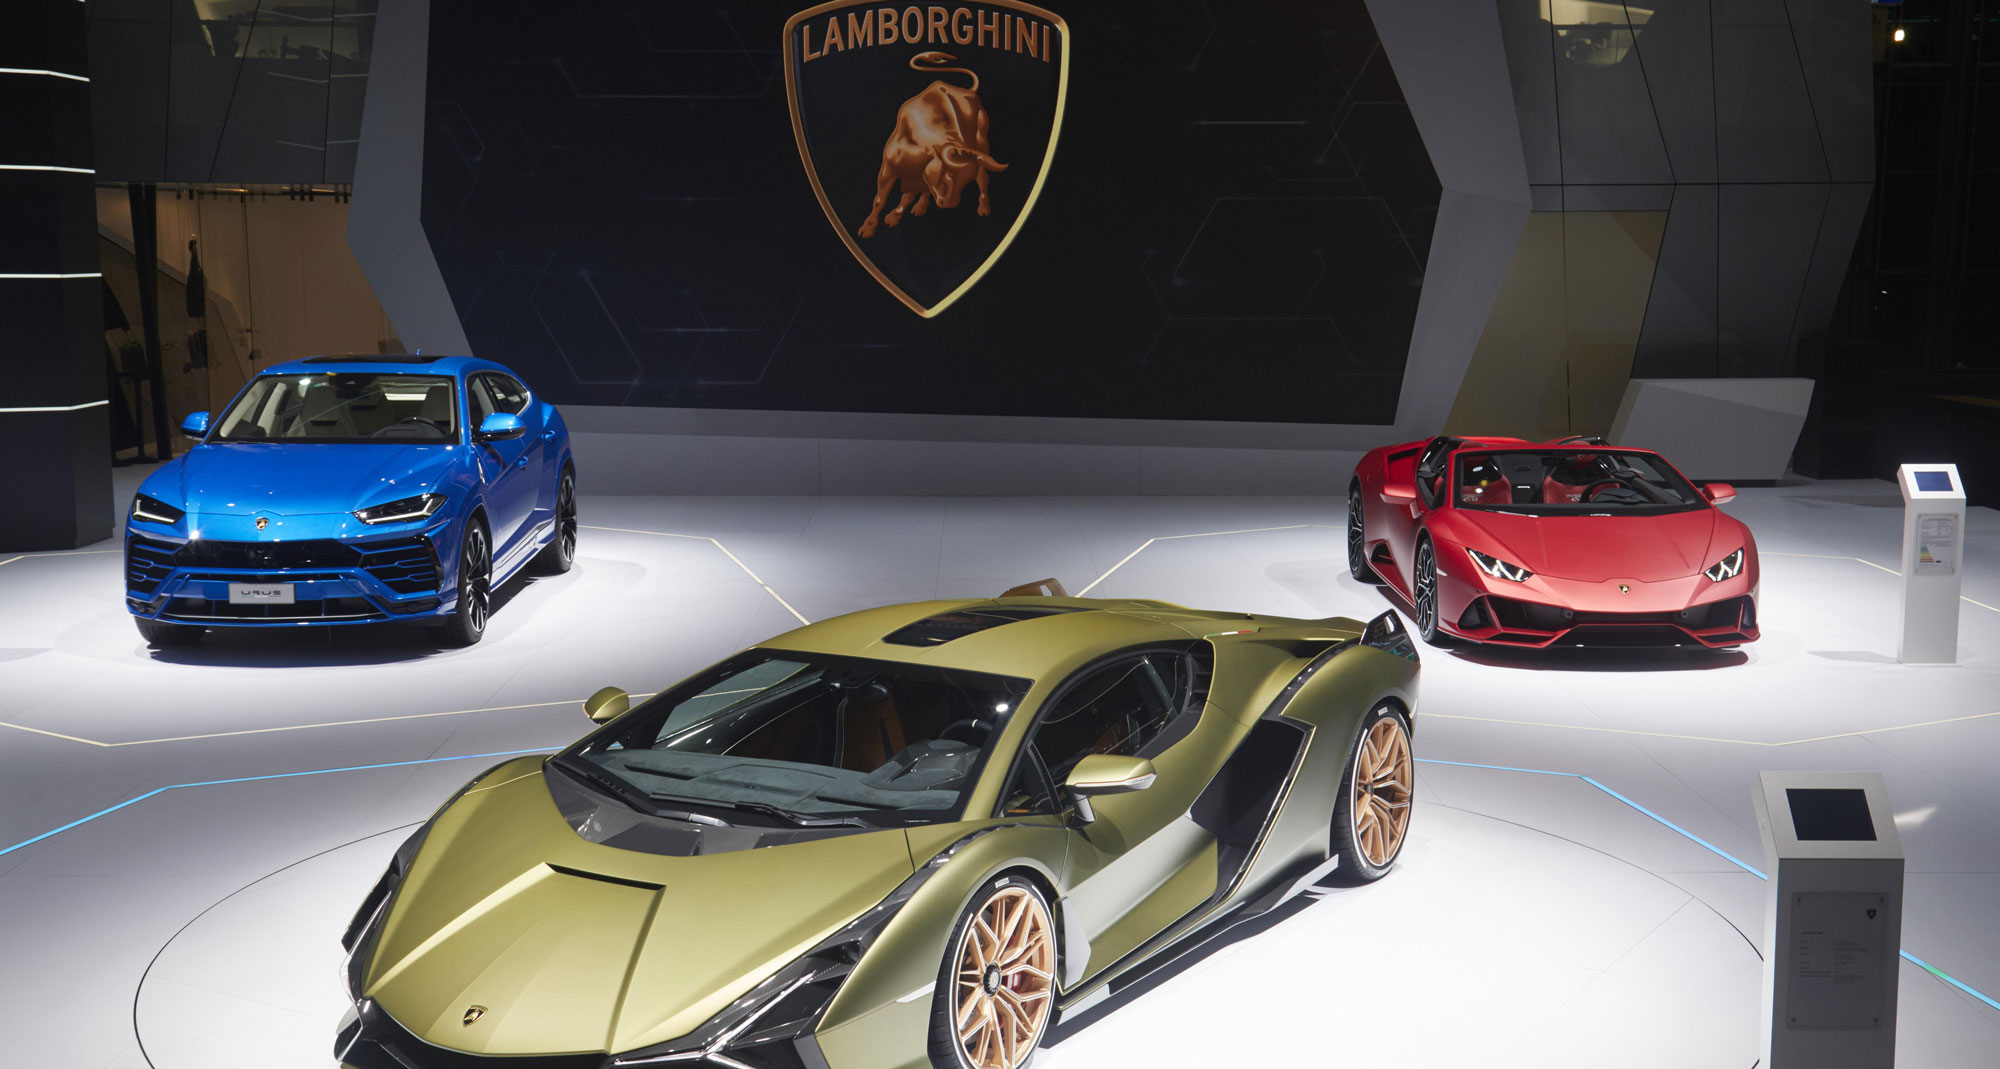 How Lamborghinis Became Status Symbols